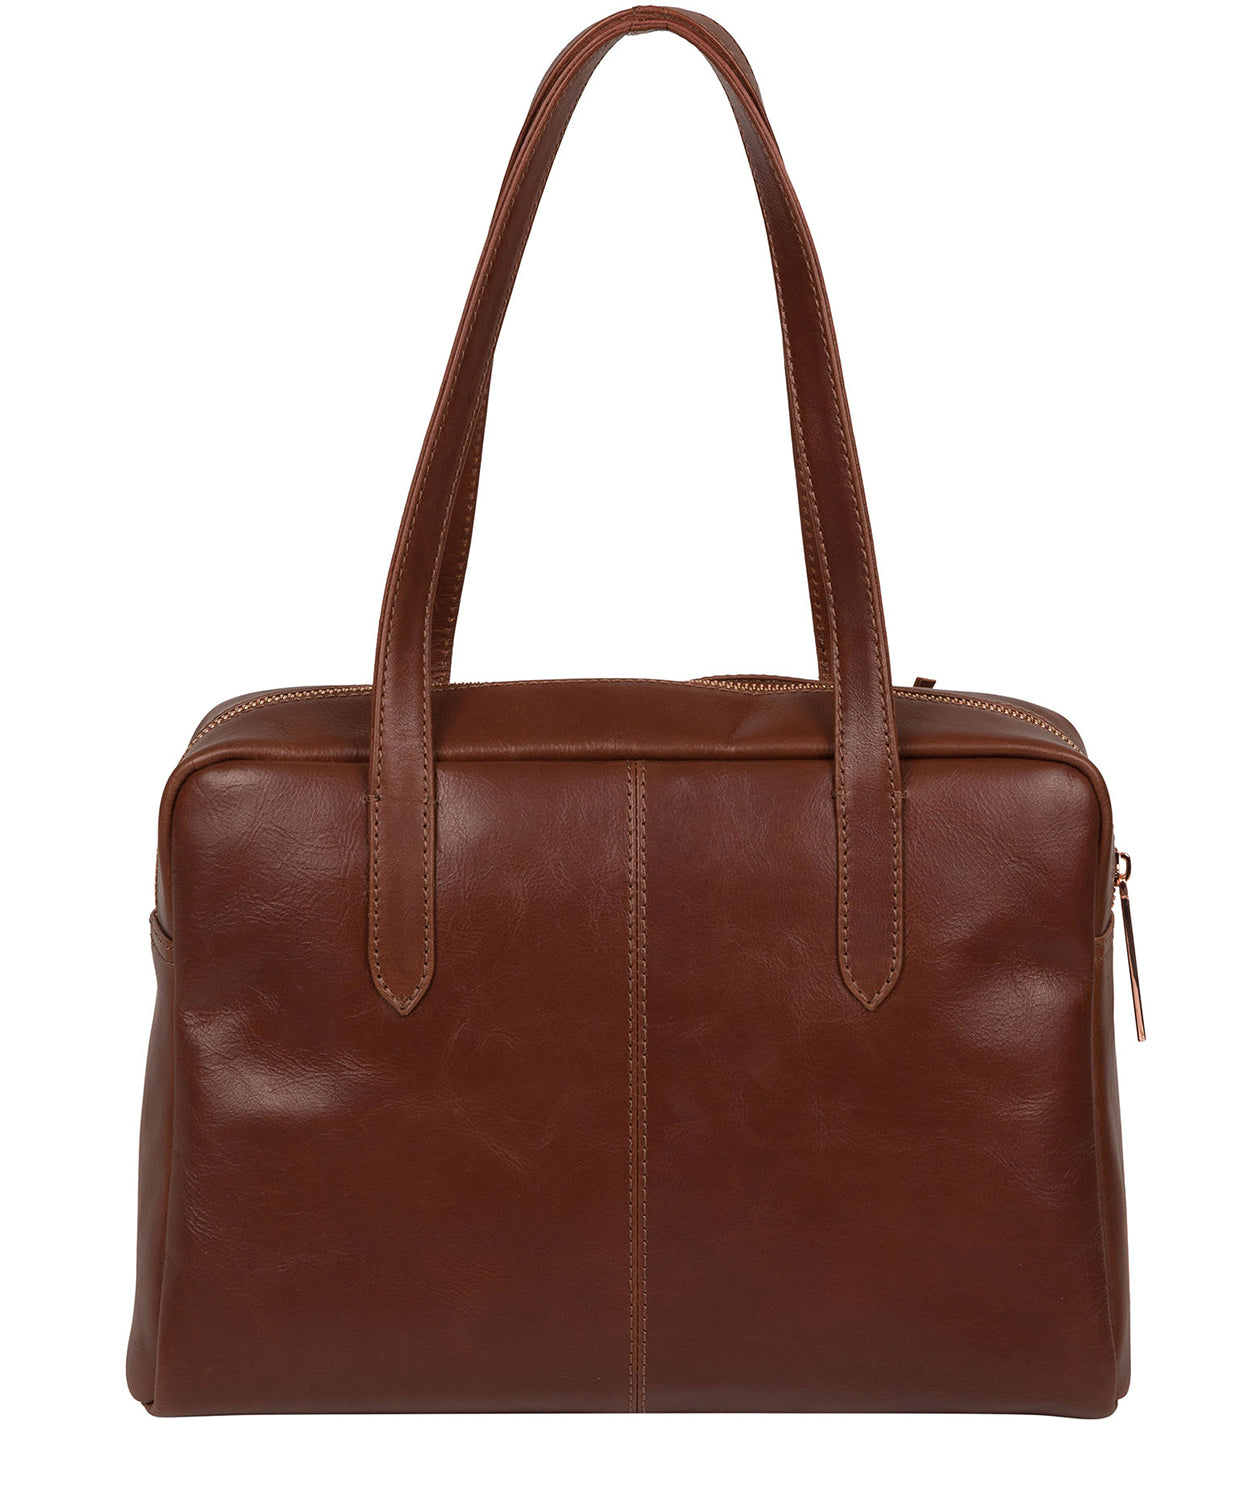 'Madox' Cognac Leather Handbag image 3